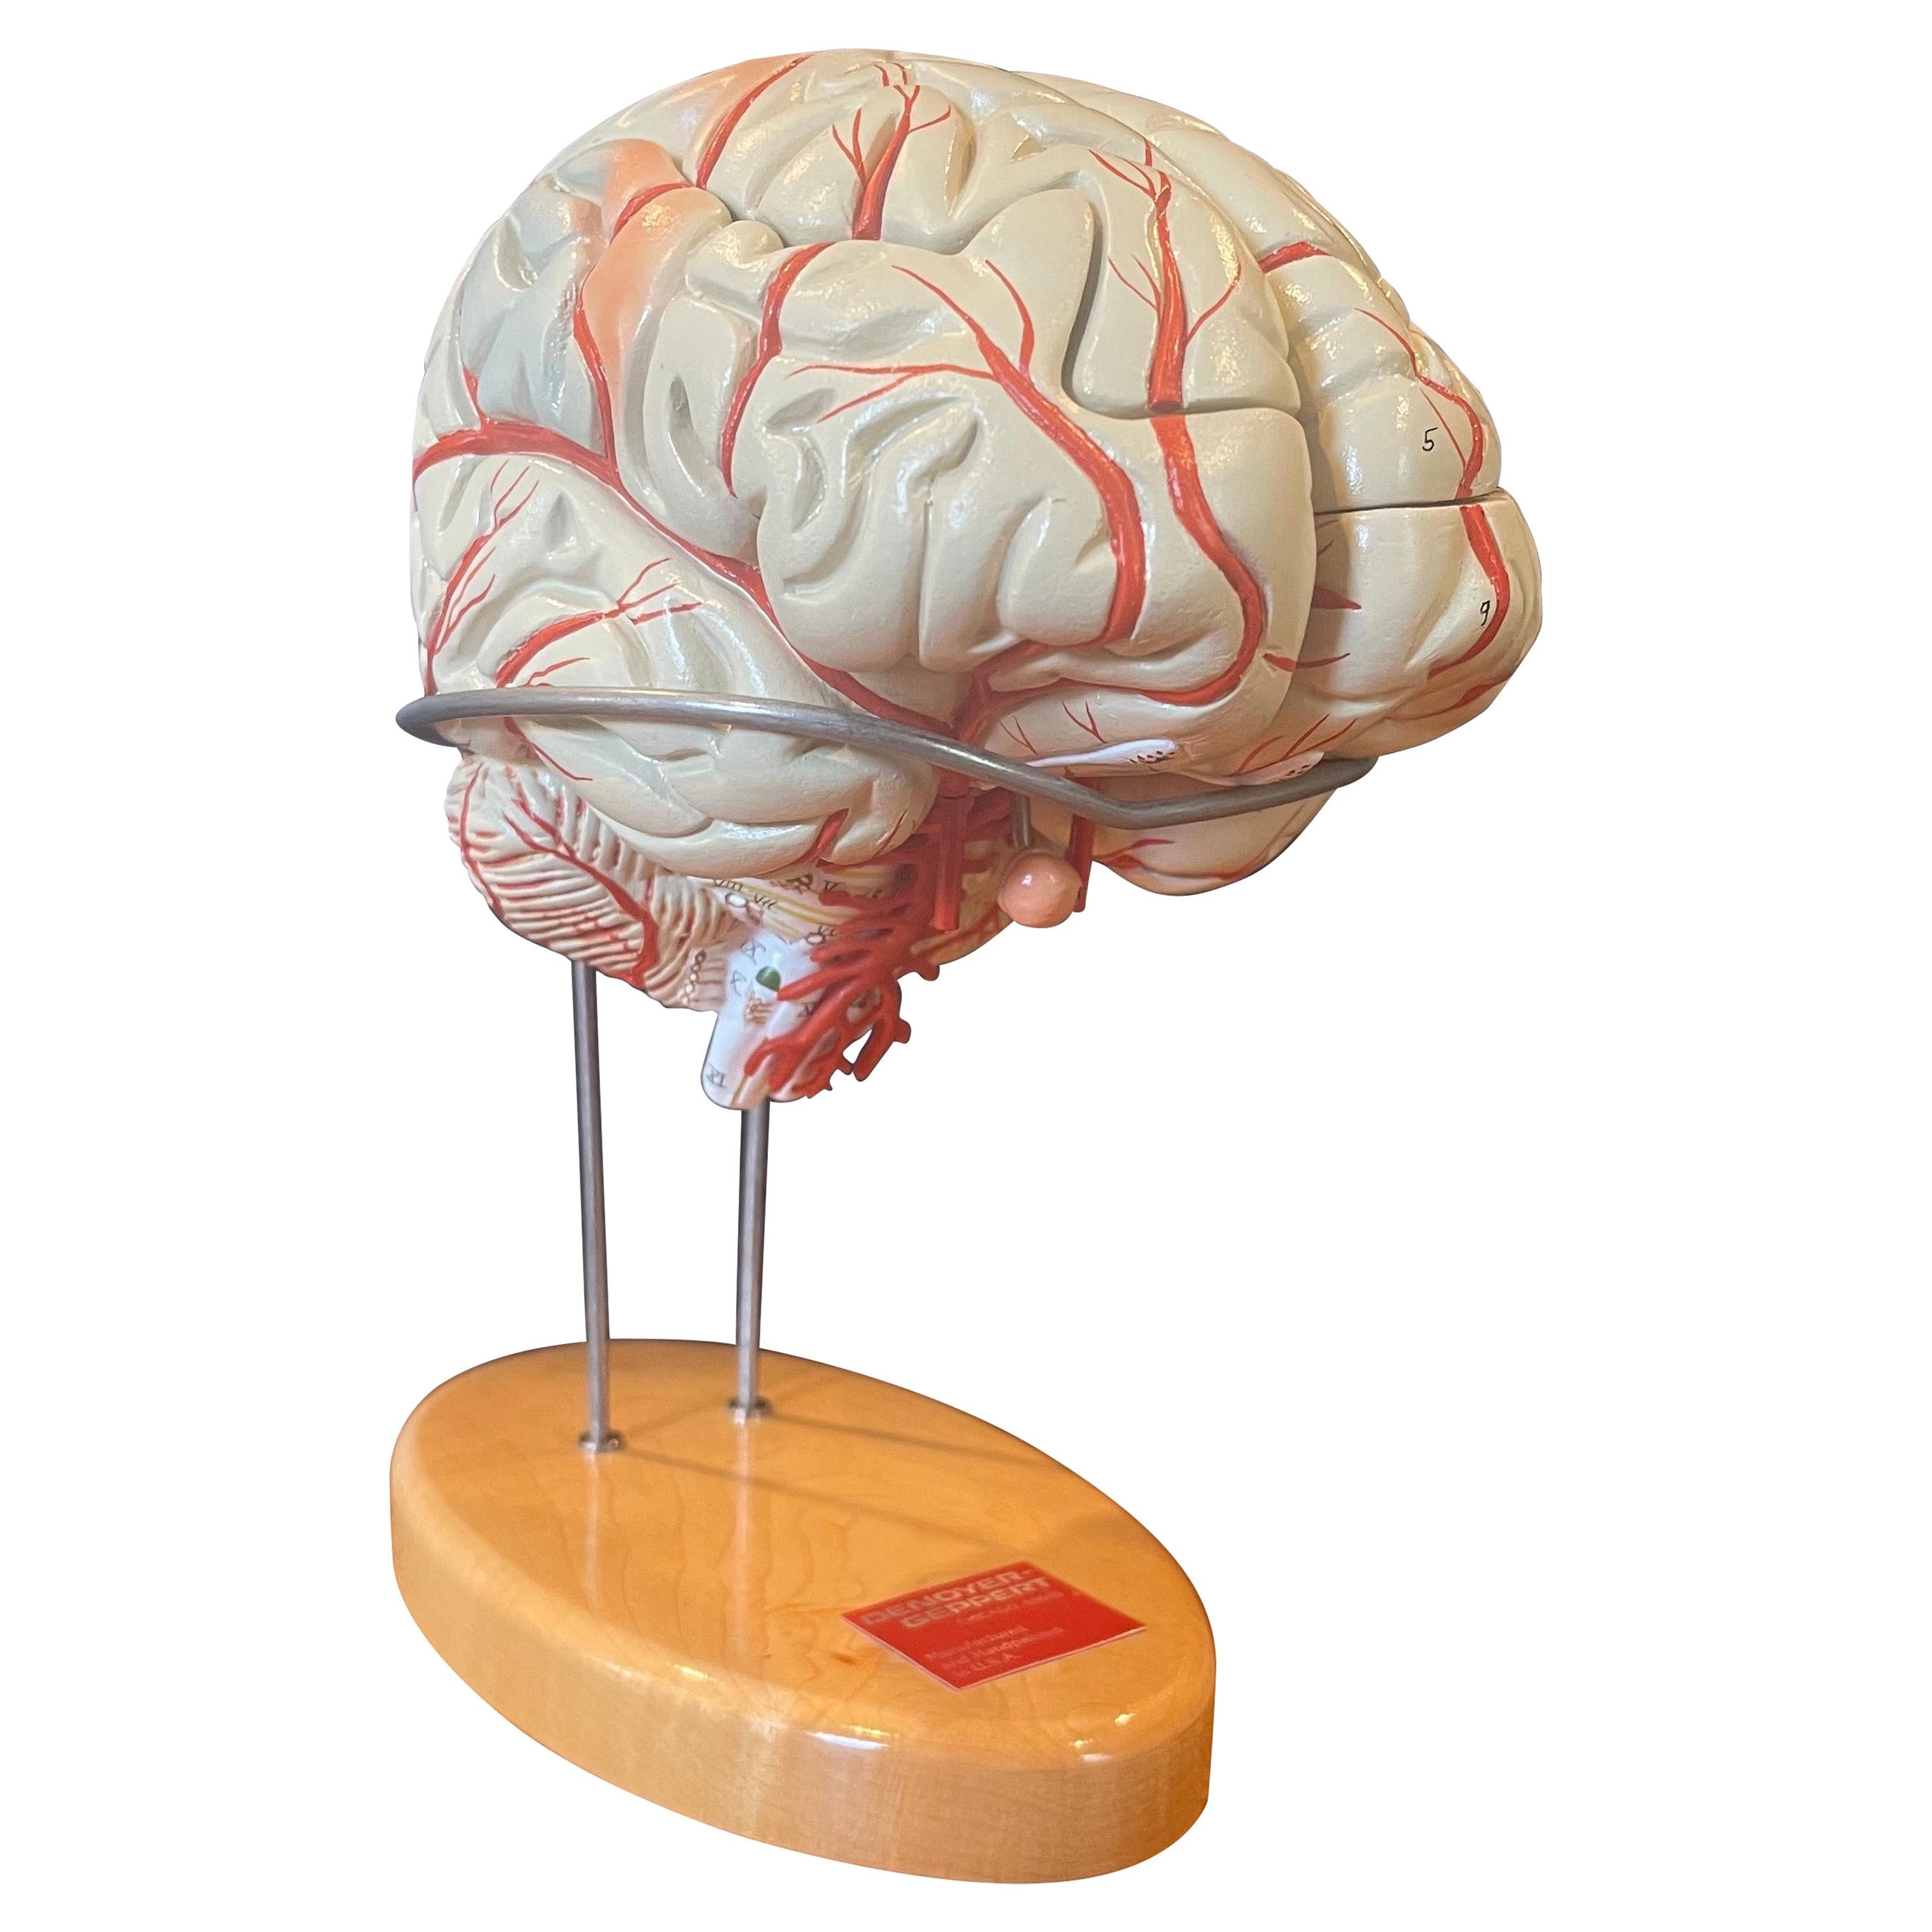 Vintage Hand-Painted Brain Model by Denoyer Geppert